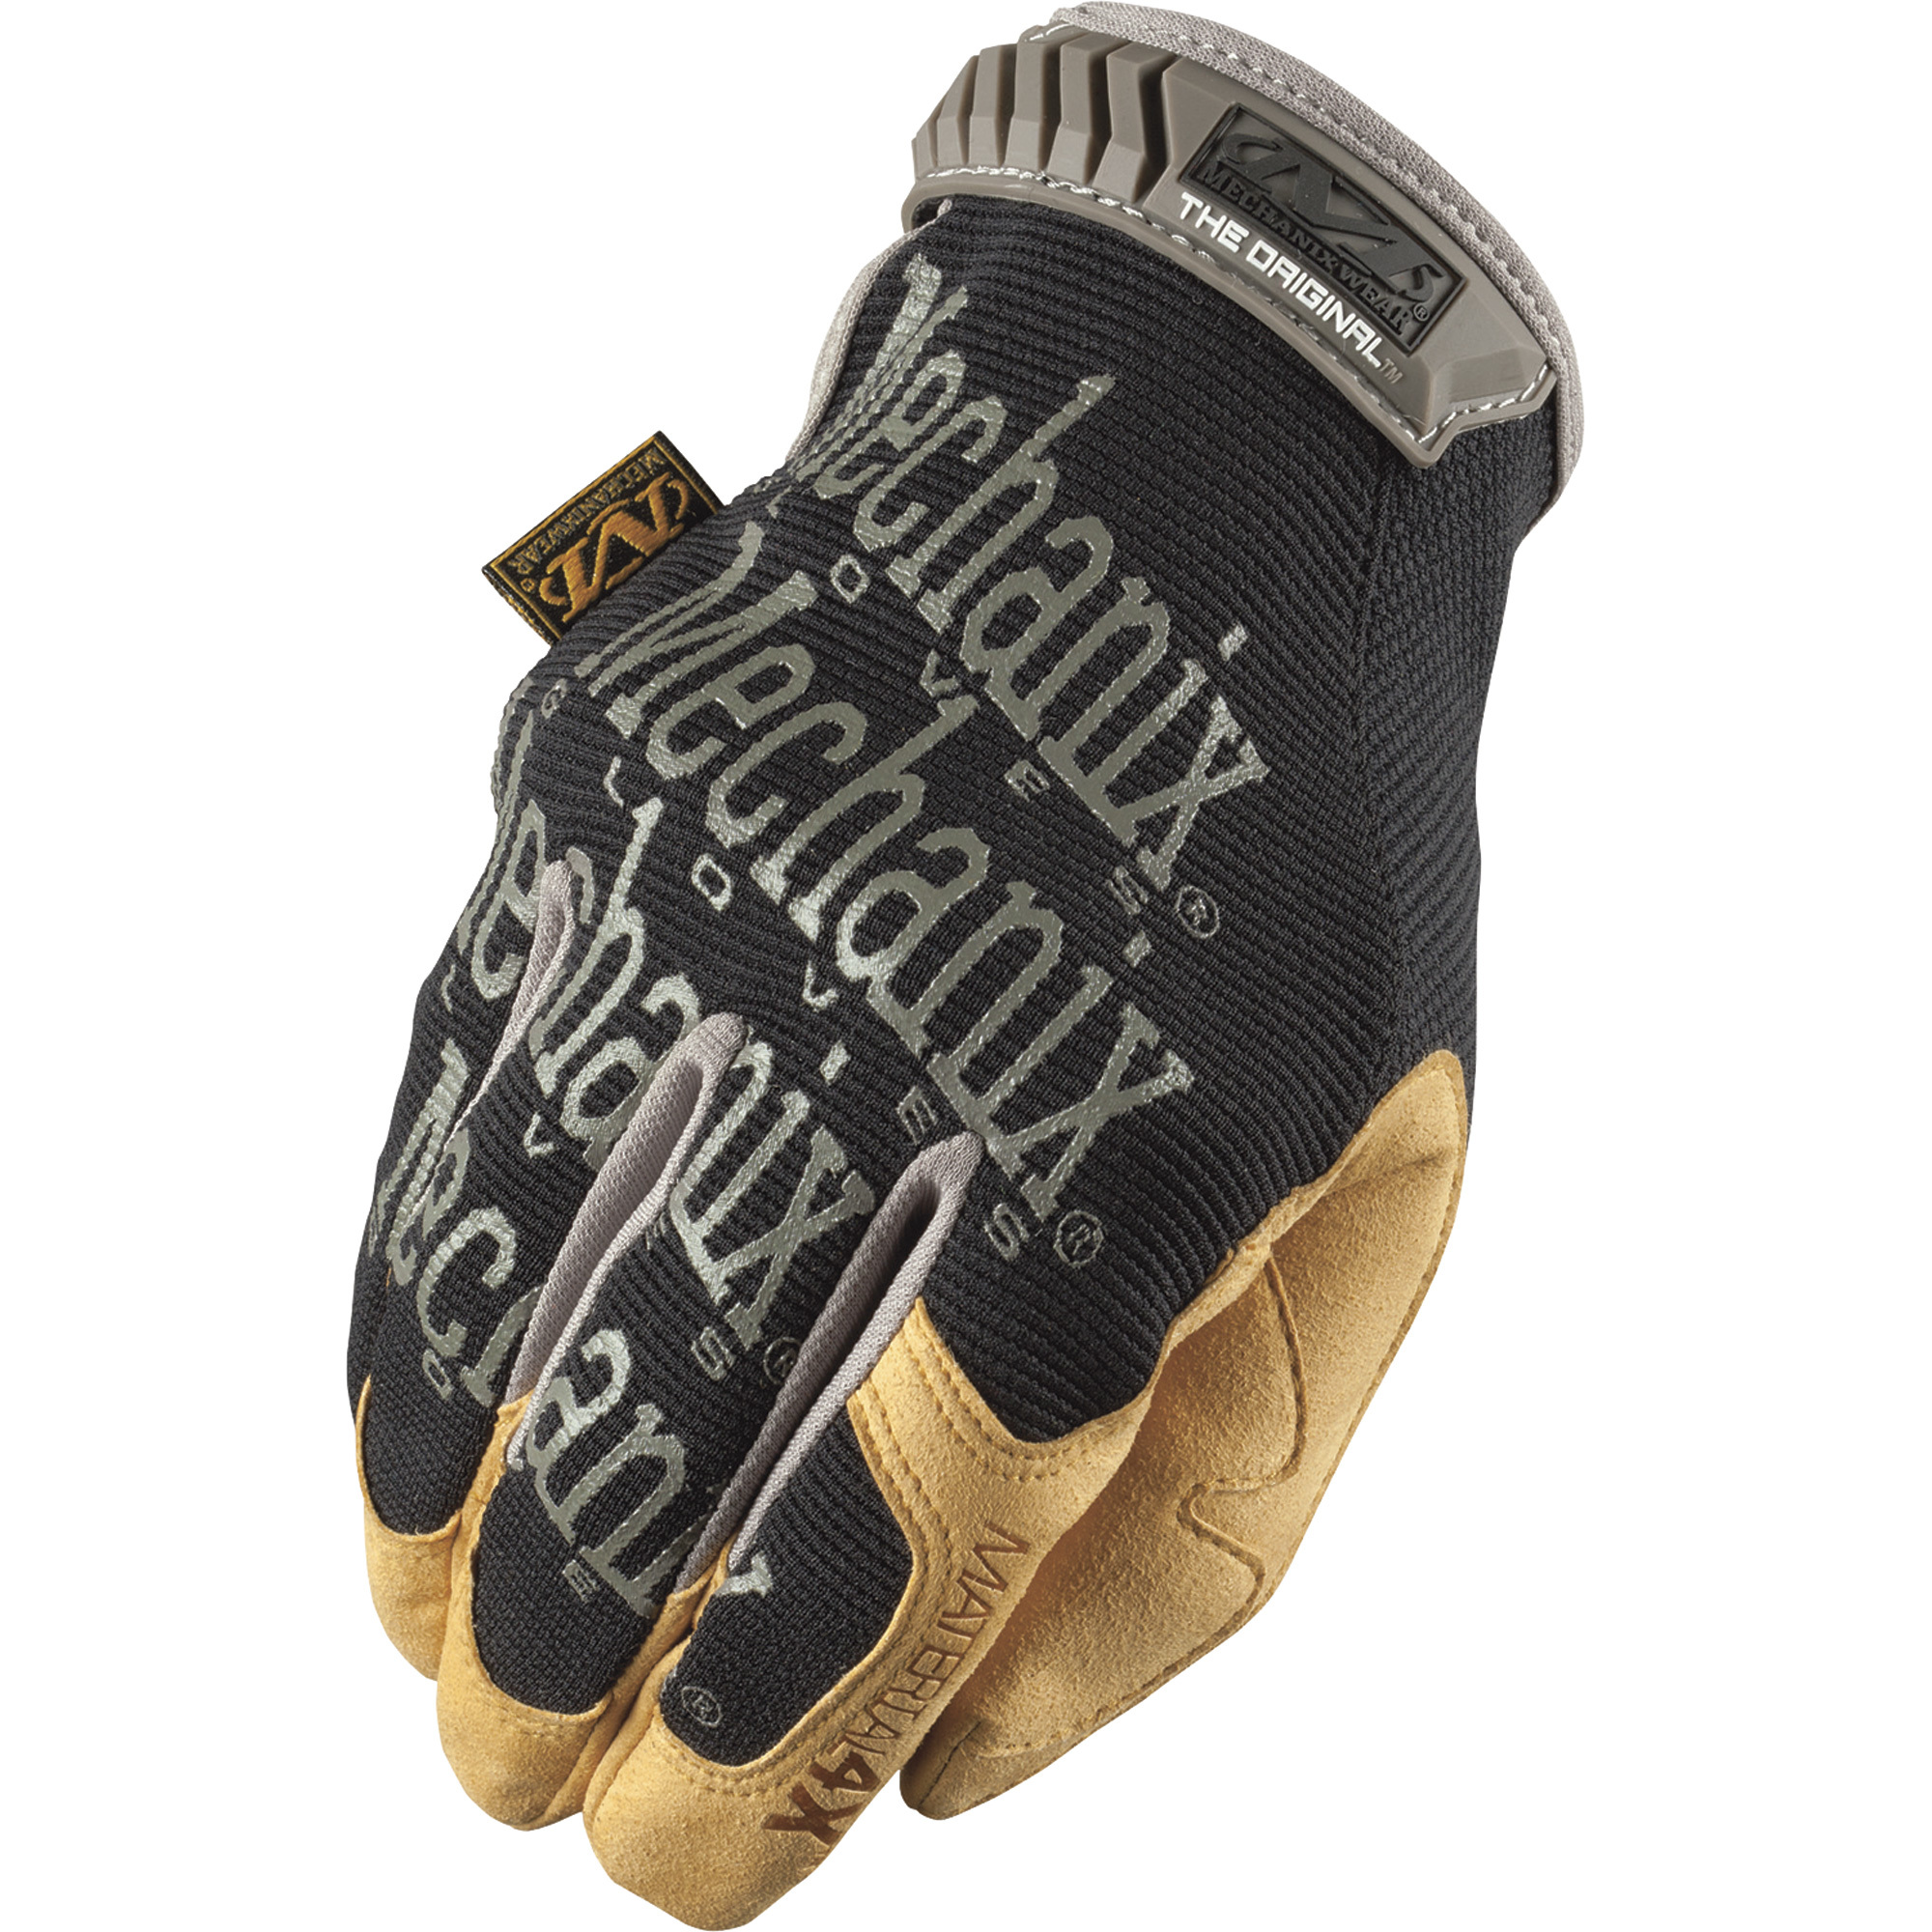 Mechanix Men's Wear Original Material 4X Gloves - Black & Tan, Large, Model MG4X-75